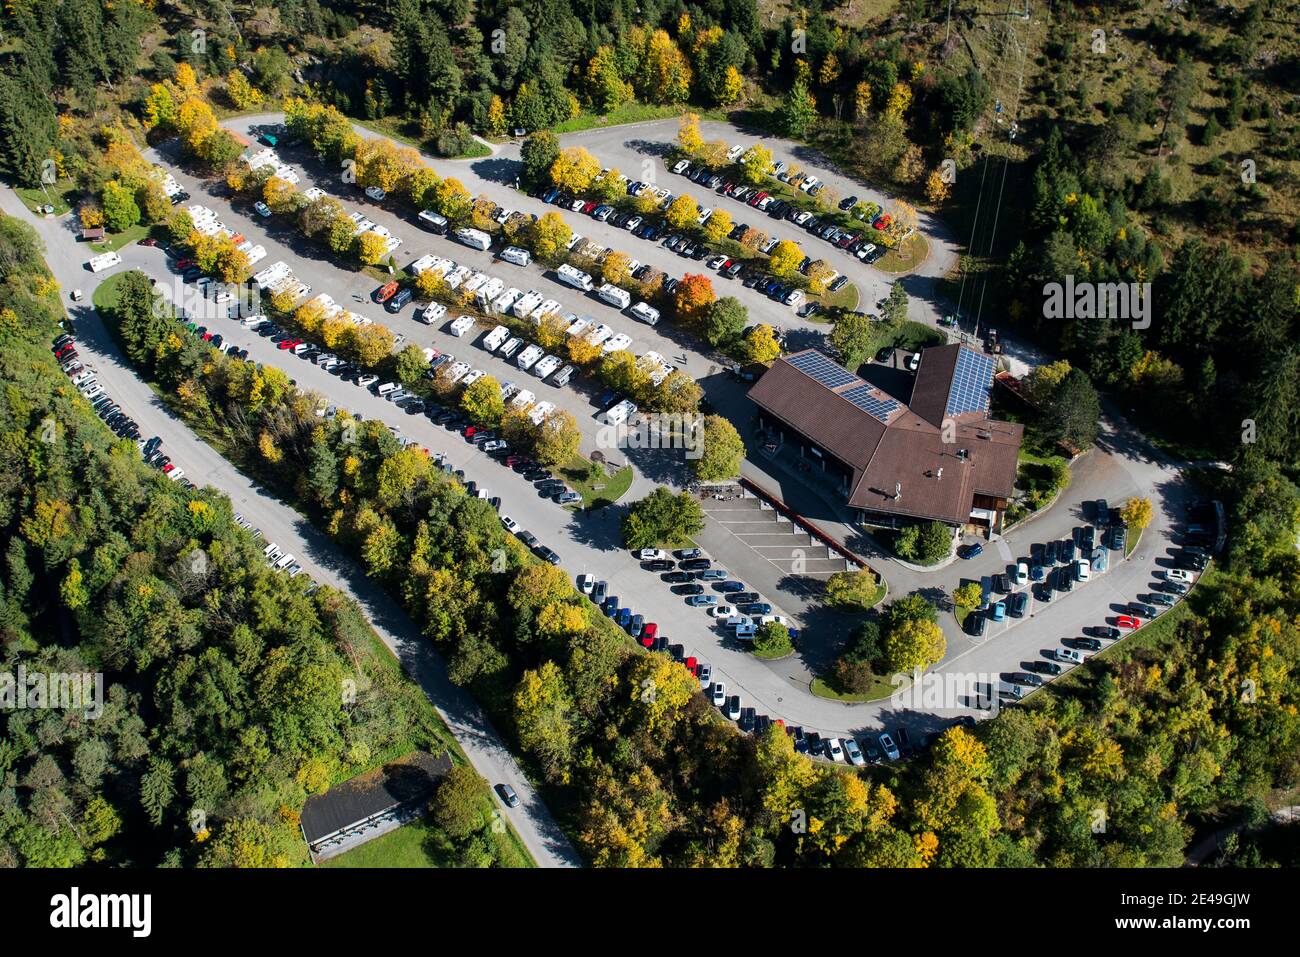 Wank, Wankbahn, valley station, motorhome park, autumn, Partenkirchen, Garmisch-Partenkirchen, aerial view, Werdenfelser Land, Oberland, Bavaria, Germany Stock Photo